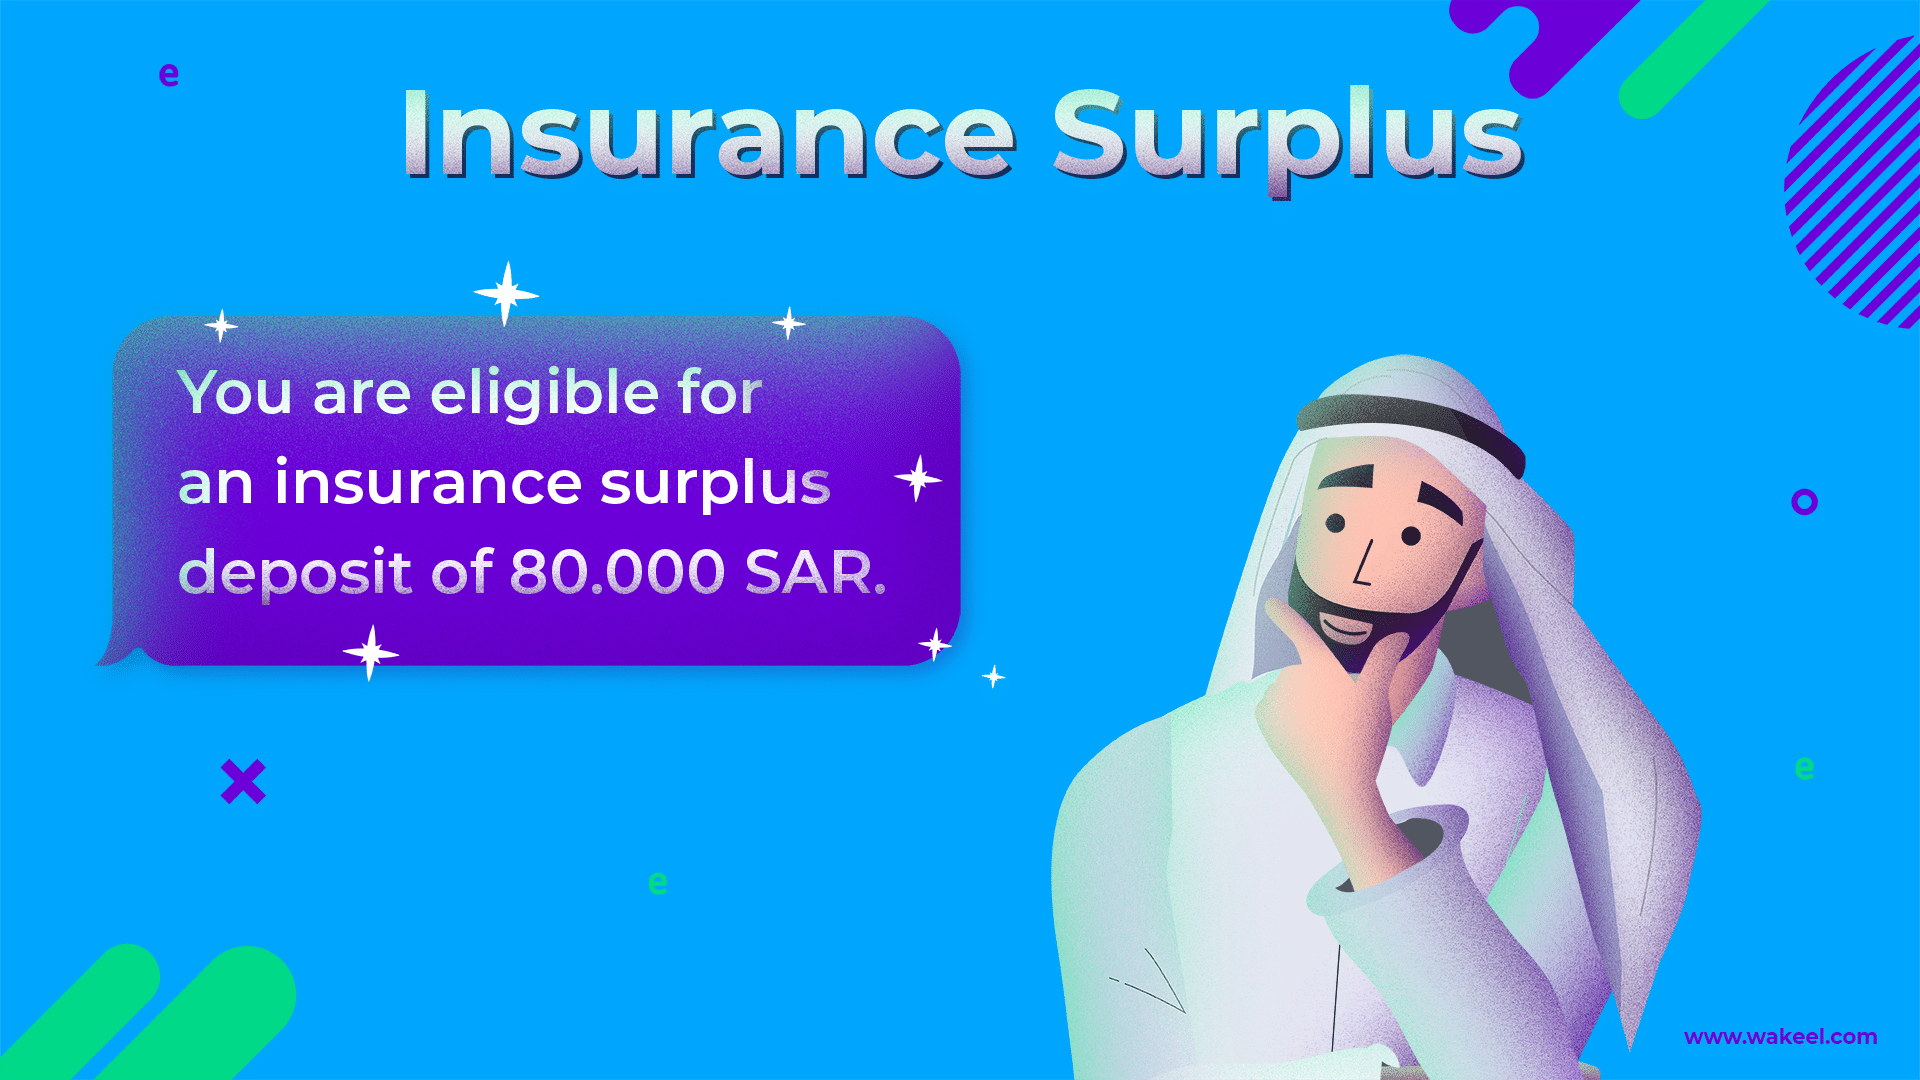 Insurance Surplus Distribution